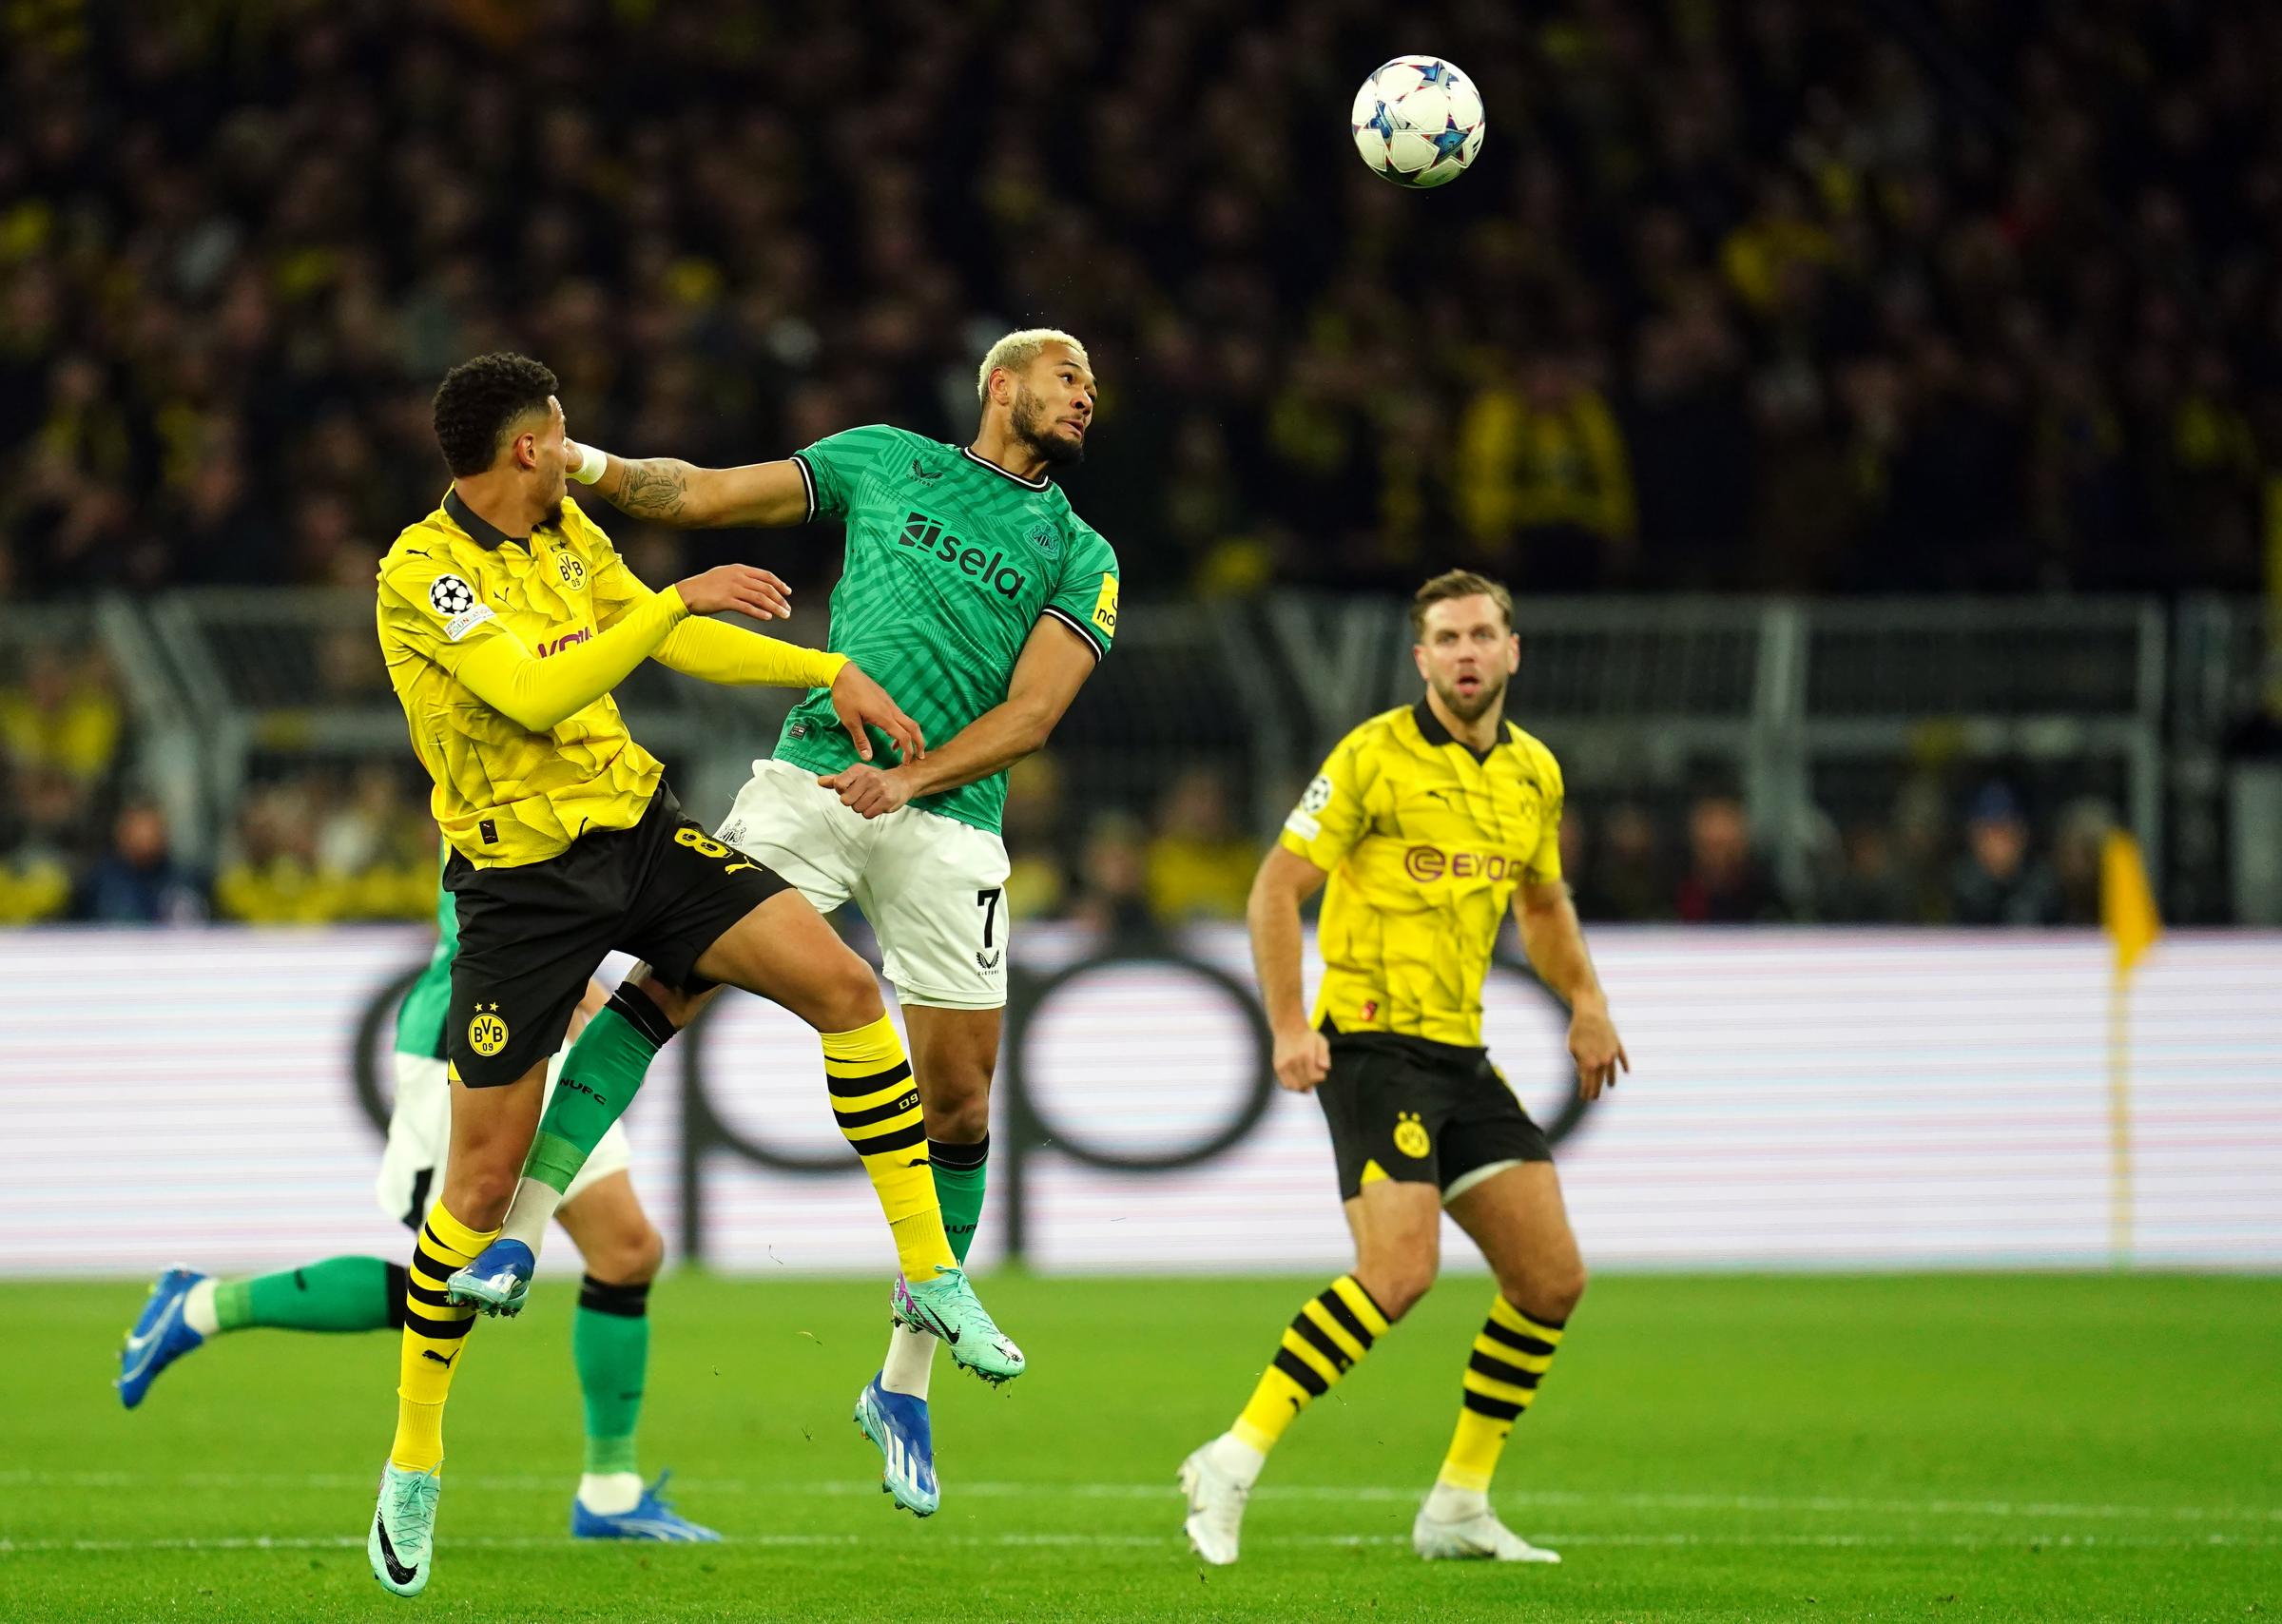 Borussia Dortmund v Newcastle United Ratings - Julian Brandt star man